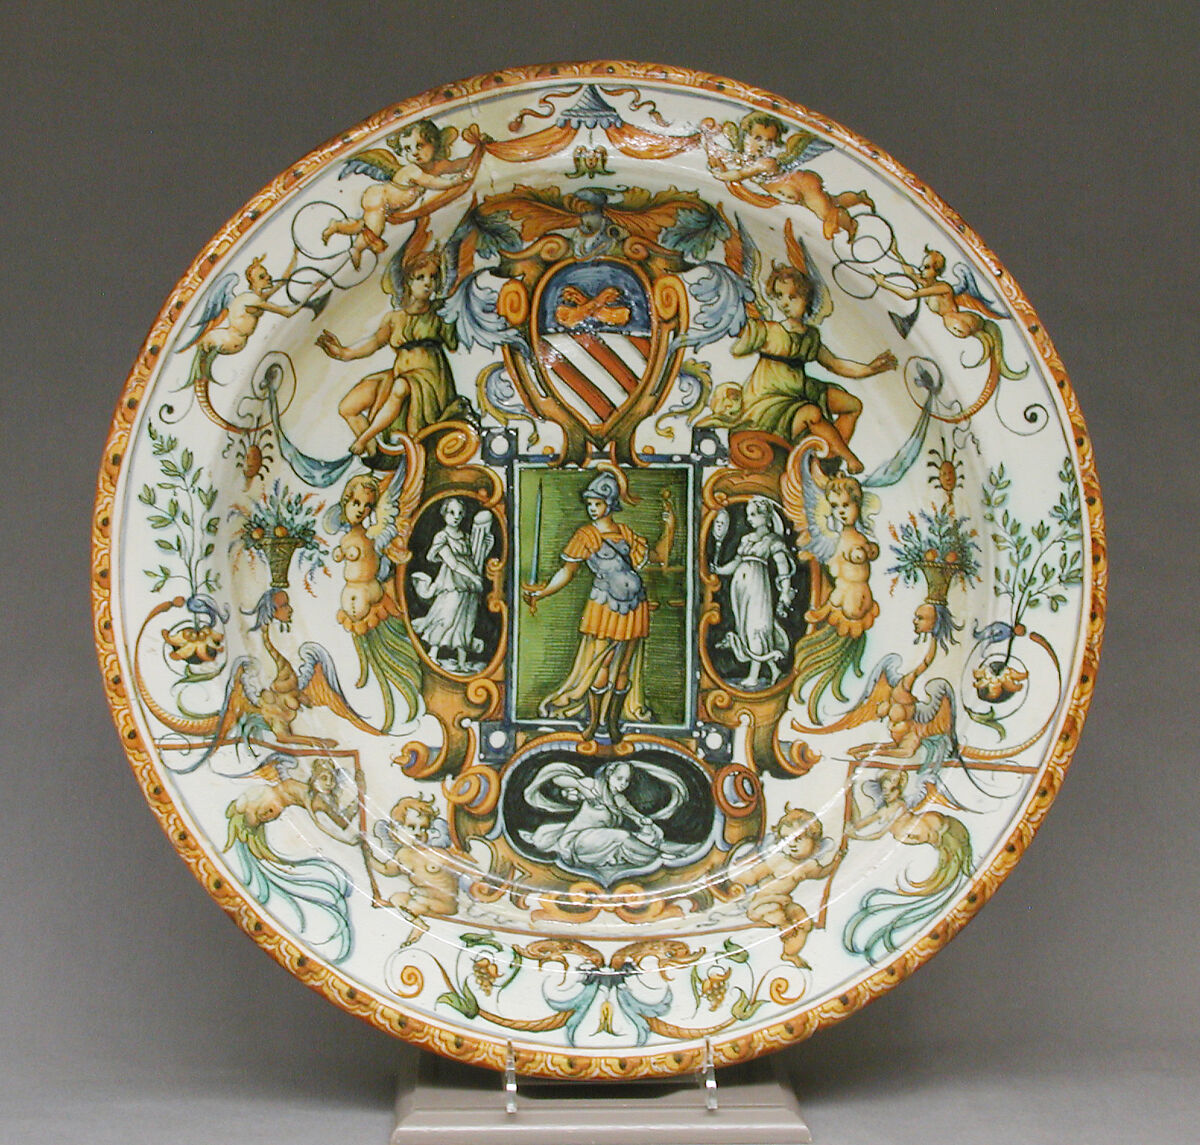 Plate, Workshop of Patanazzi family (Italian, active ca. 1580–1620), Maiolica (tin-glazed earthenware), Italian, Urbino 